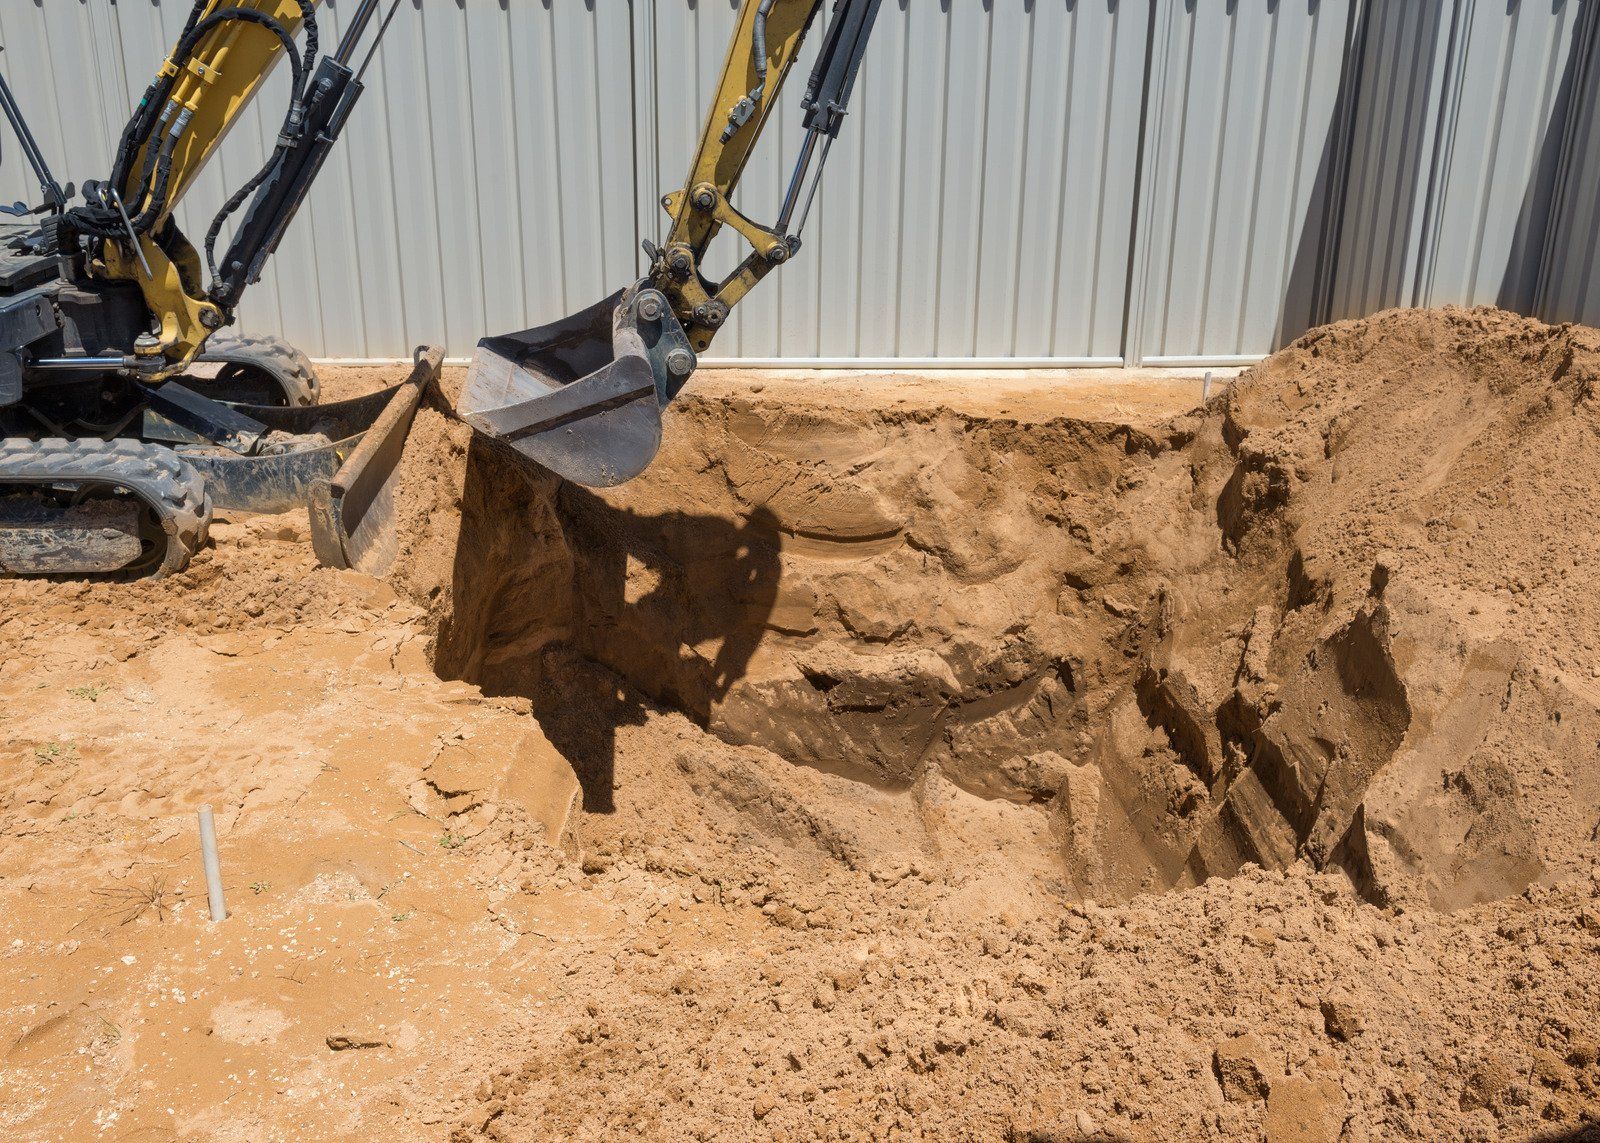 Excavator digging a hole